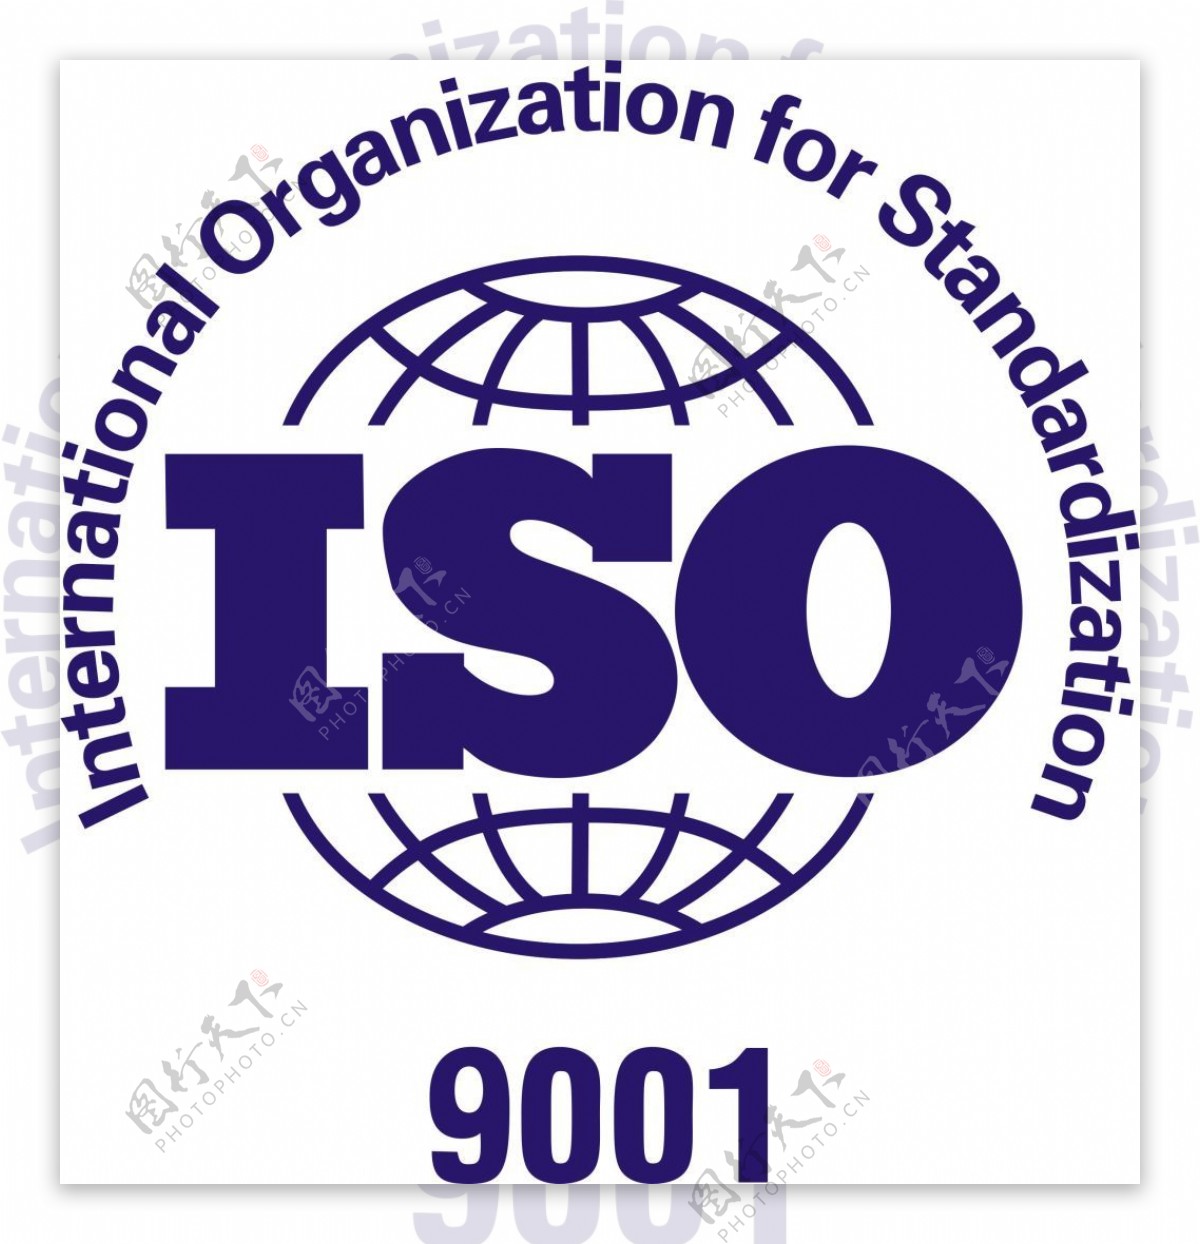 ISO认证标识图片